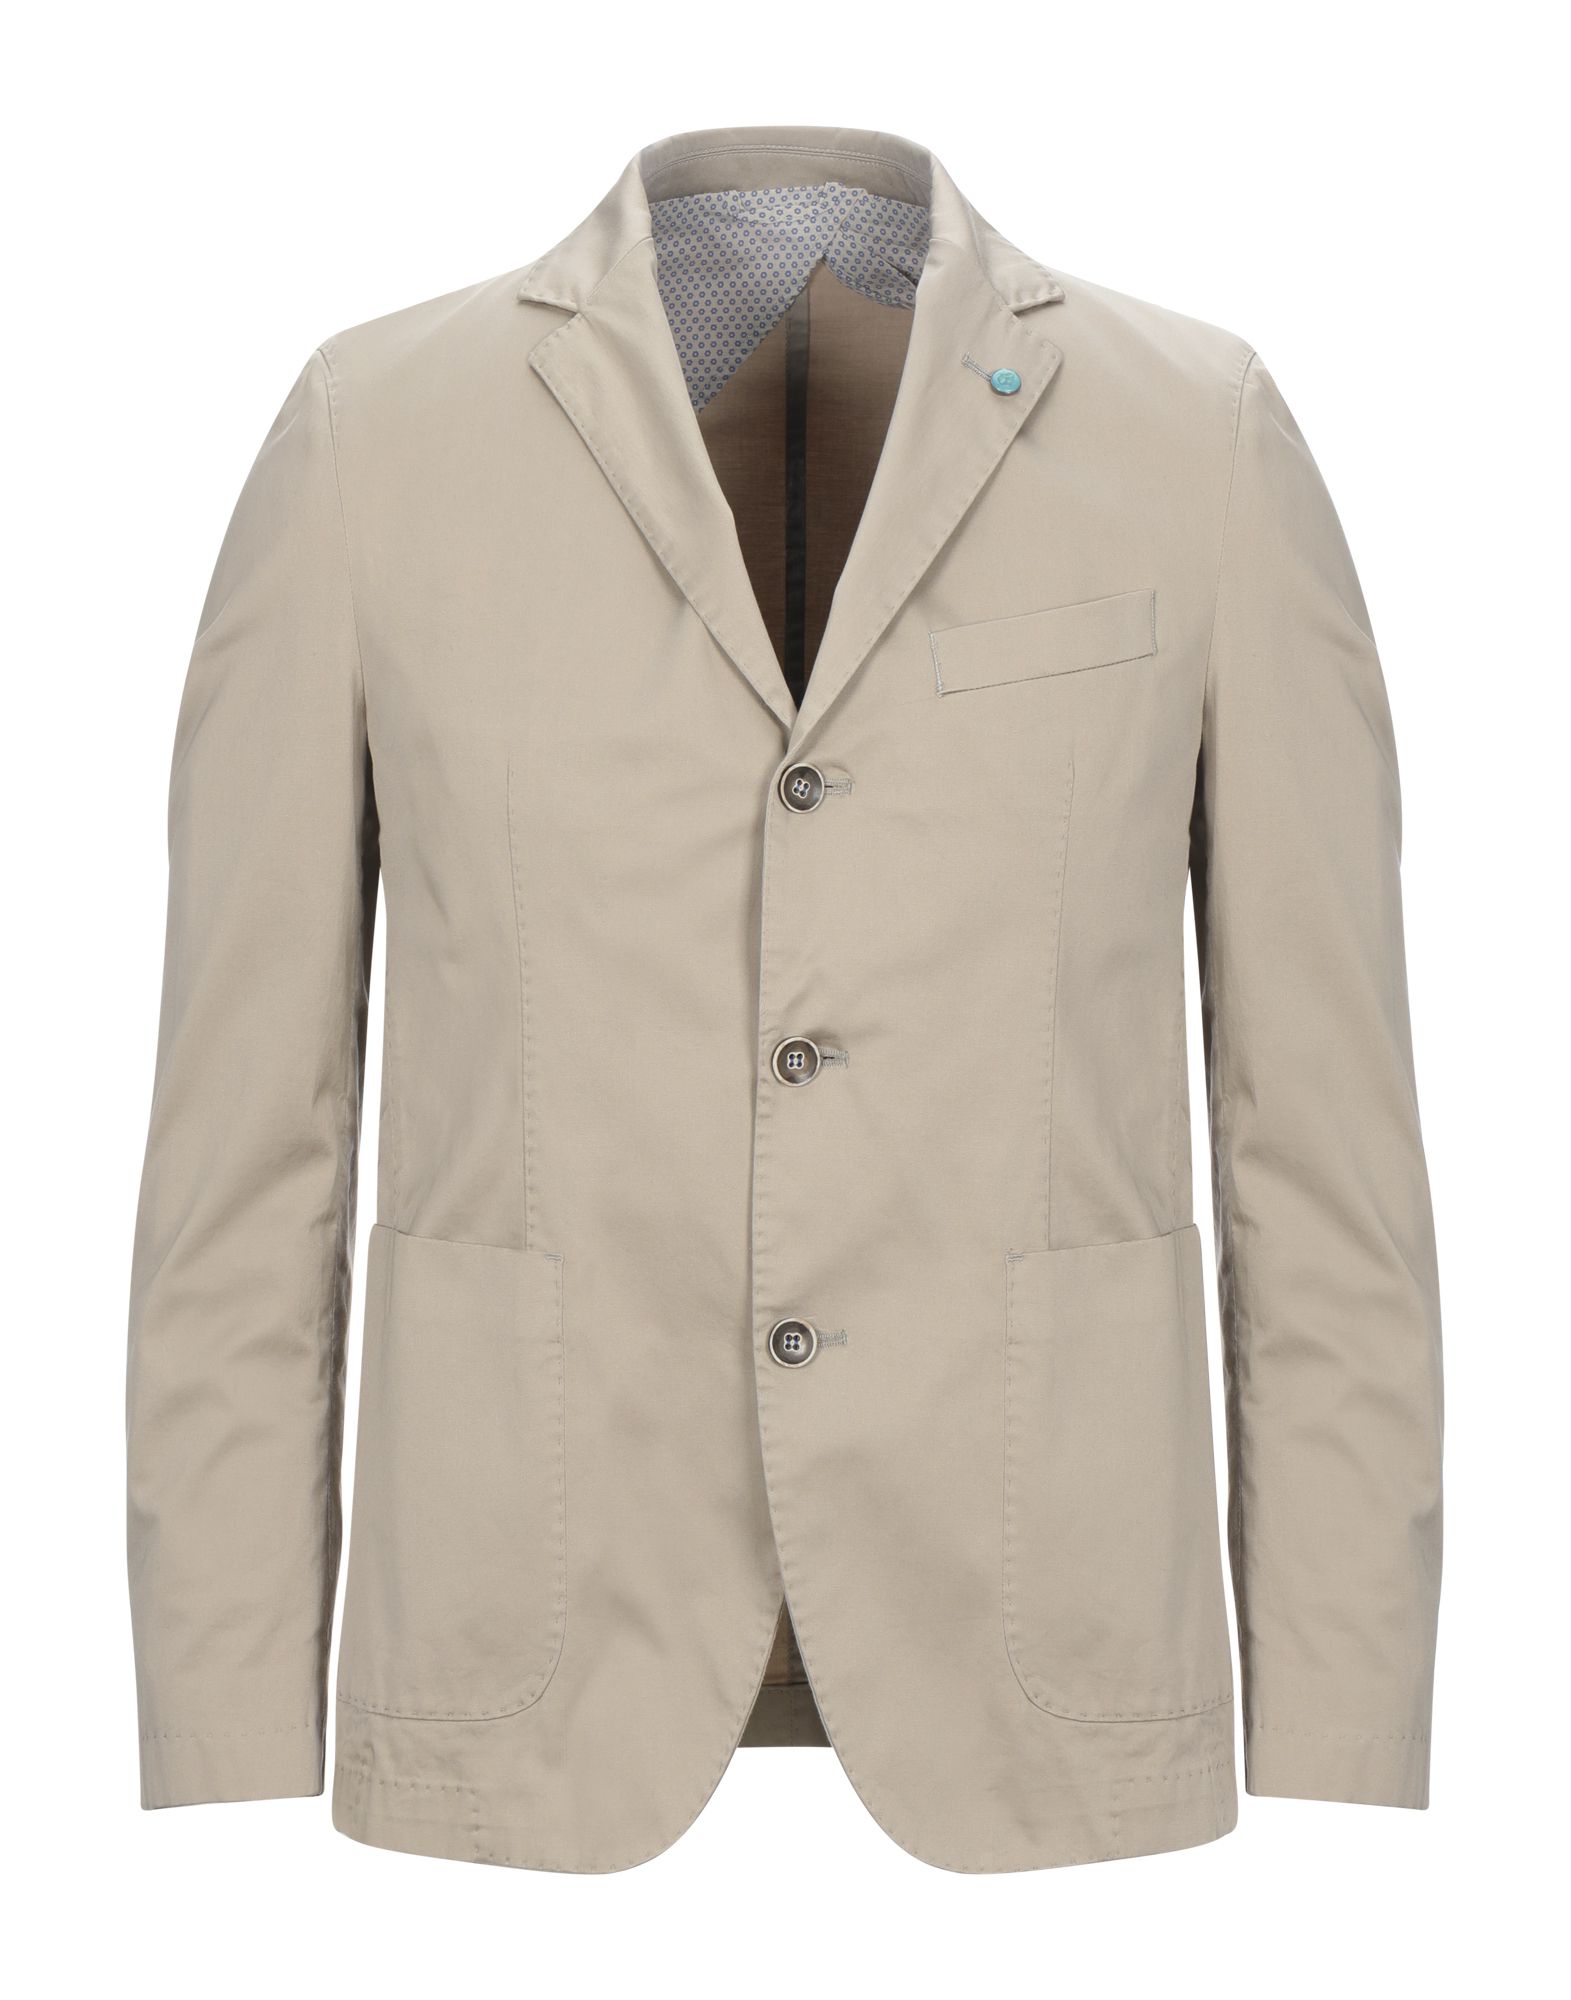 BRECO'S Suit jackets